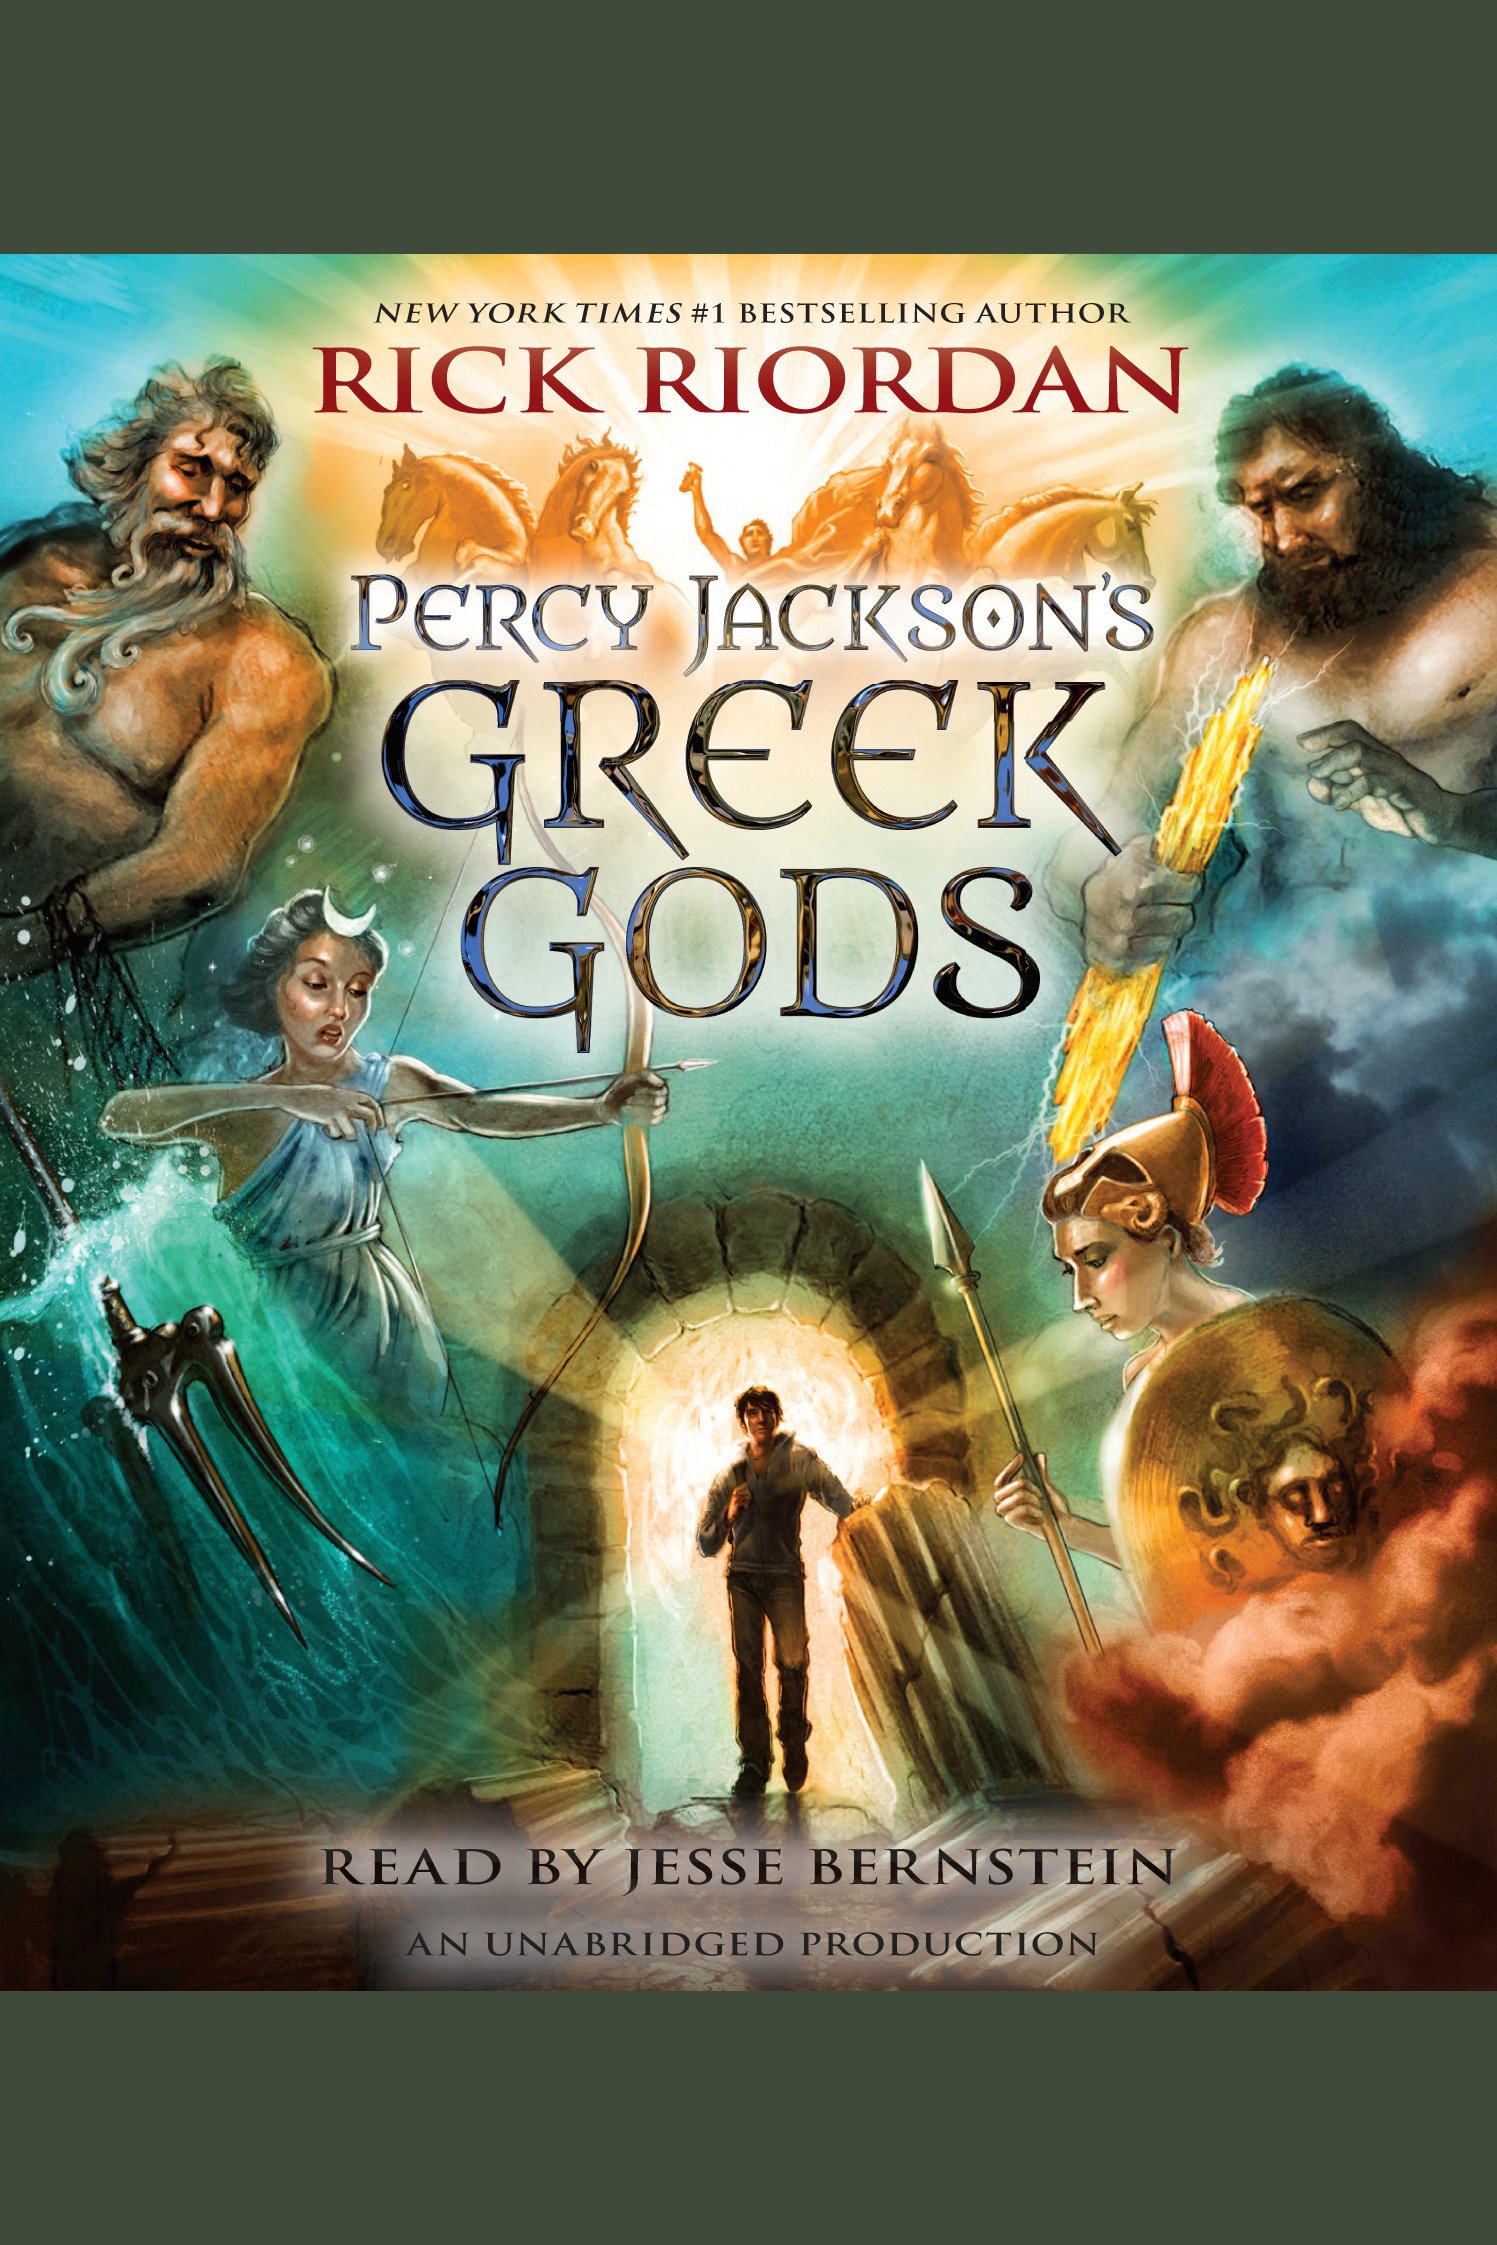 Percy Jackson's Greek gods cover image